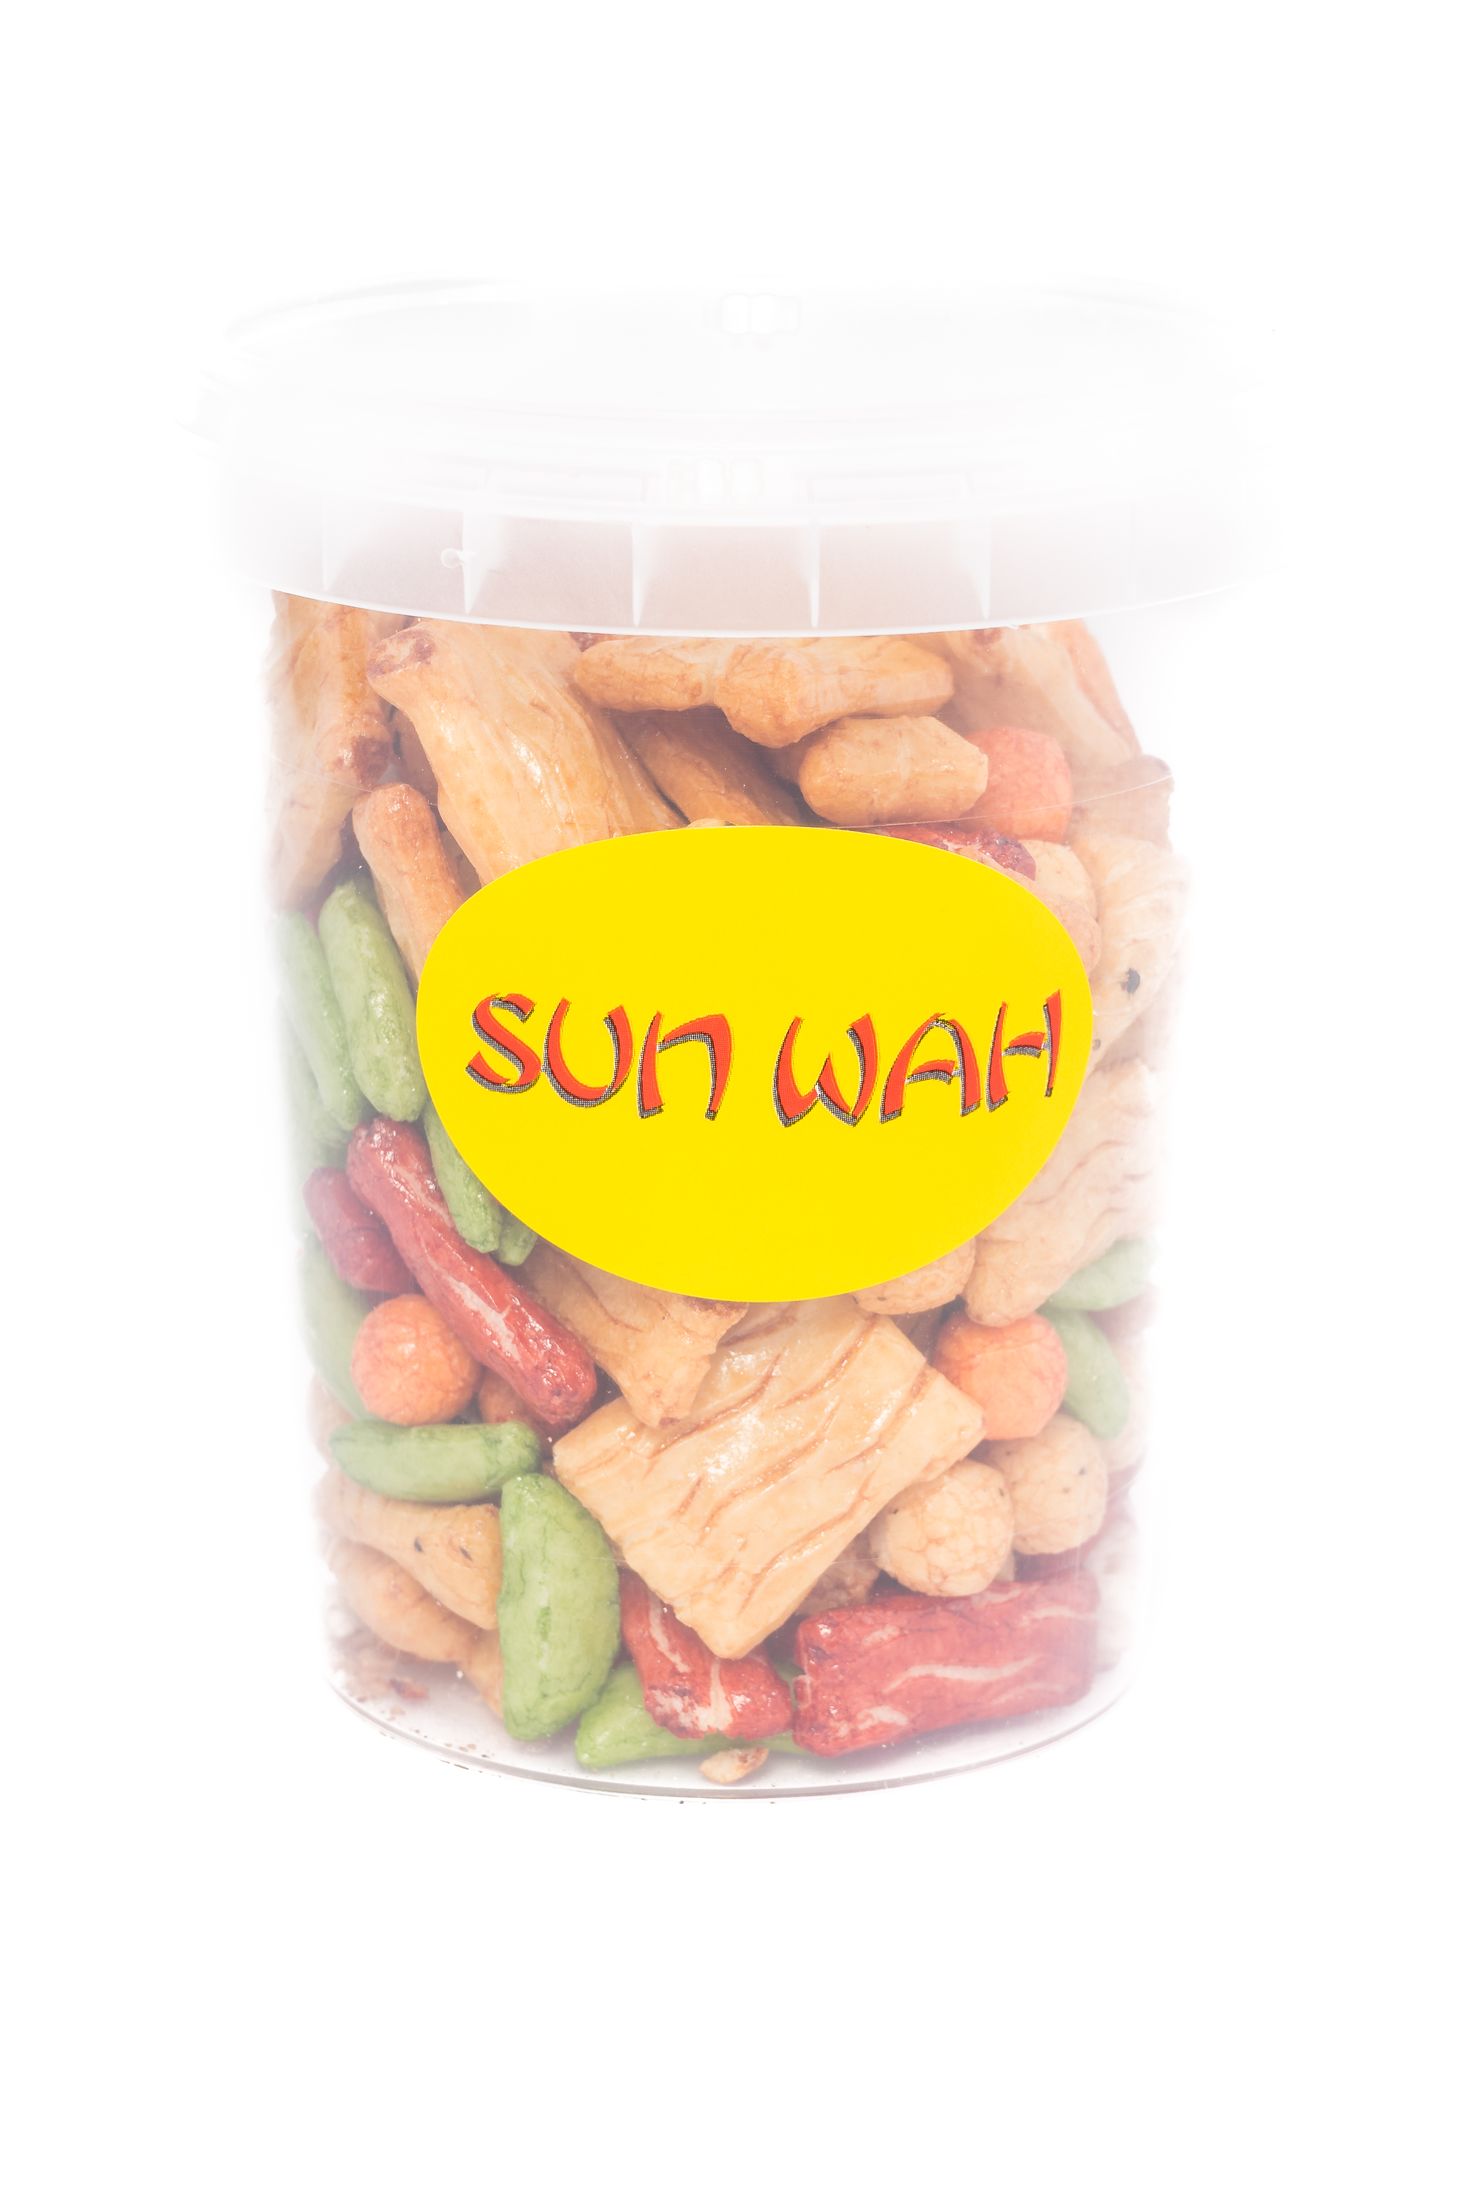 Sun Wah Rice crackers rigato mix